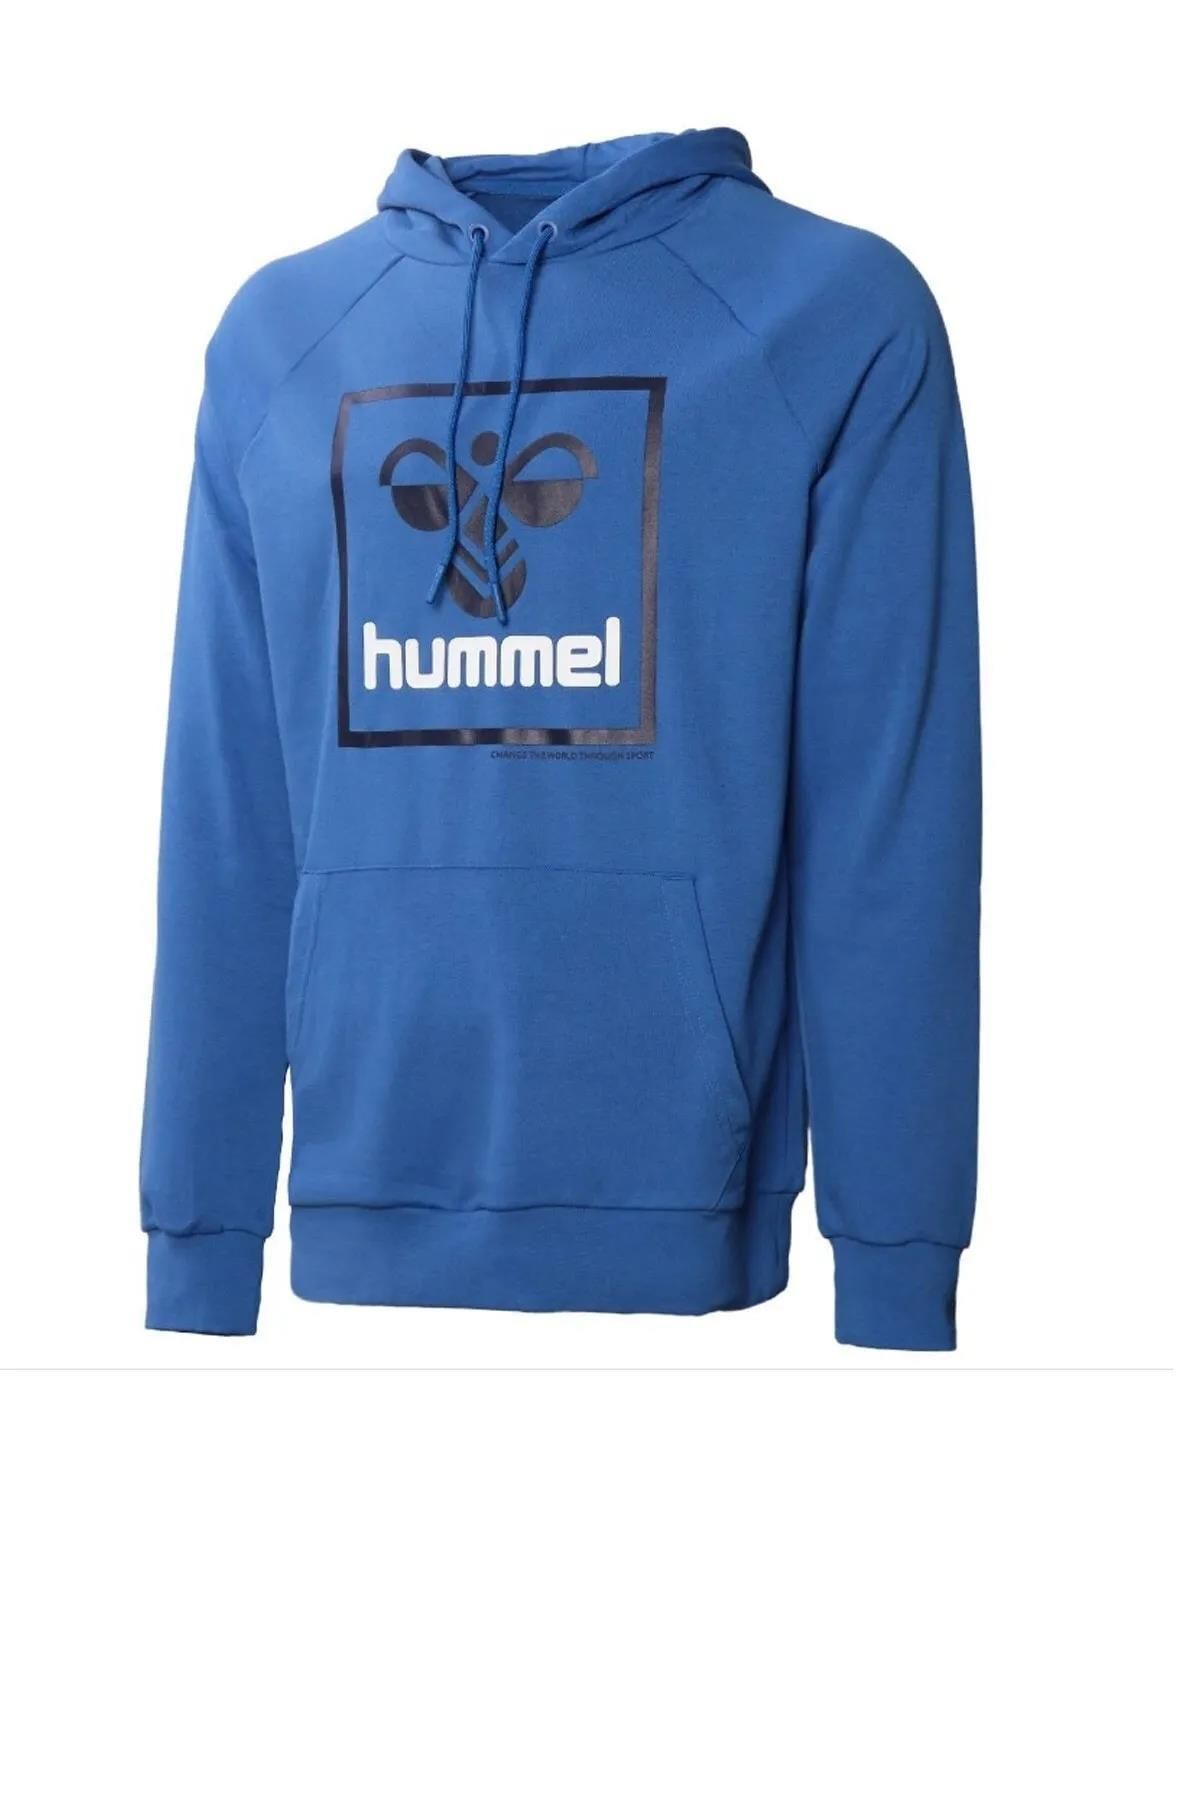 hummel T-ısam 2.0 Erkek Sweatshirt 921556-7045